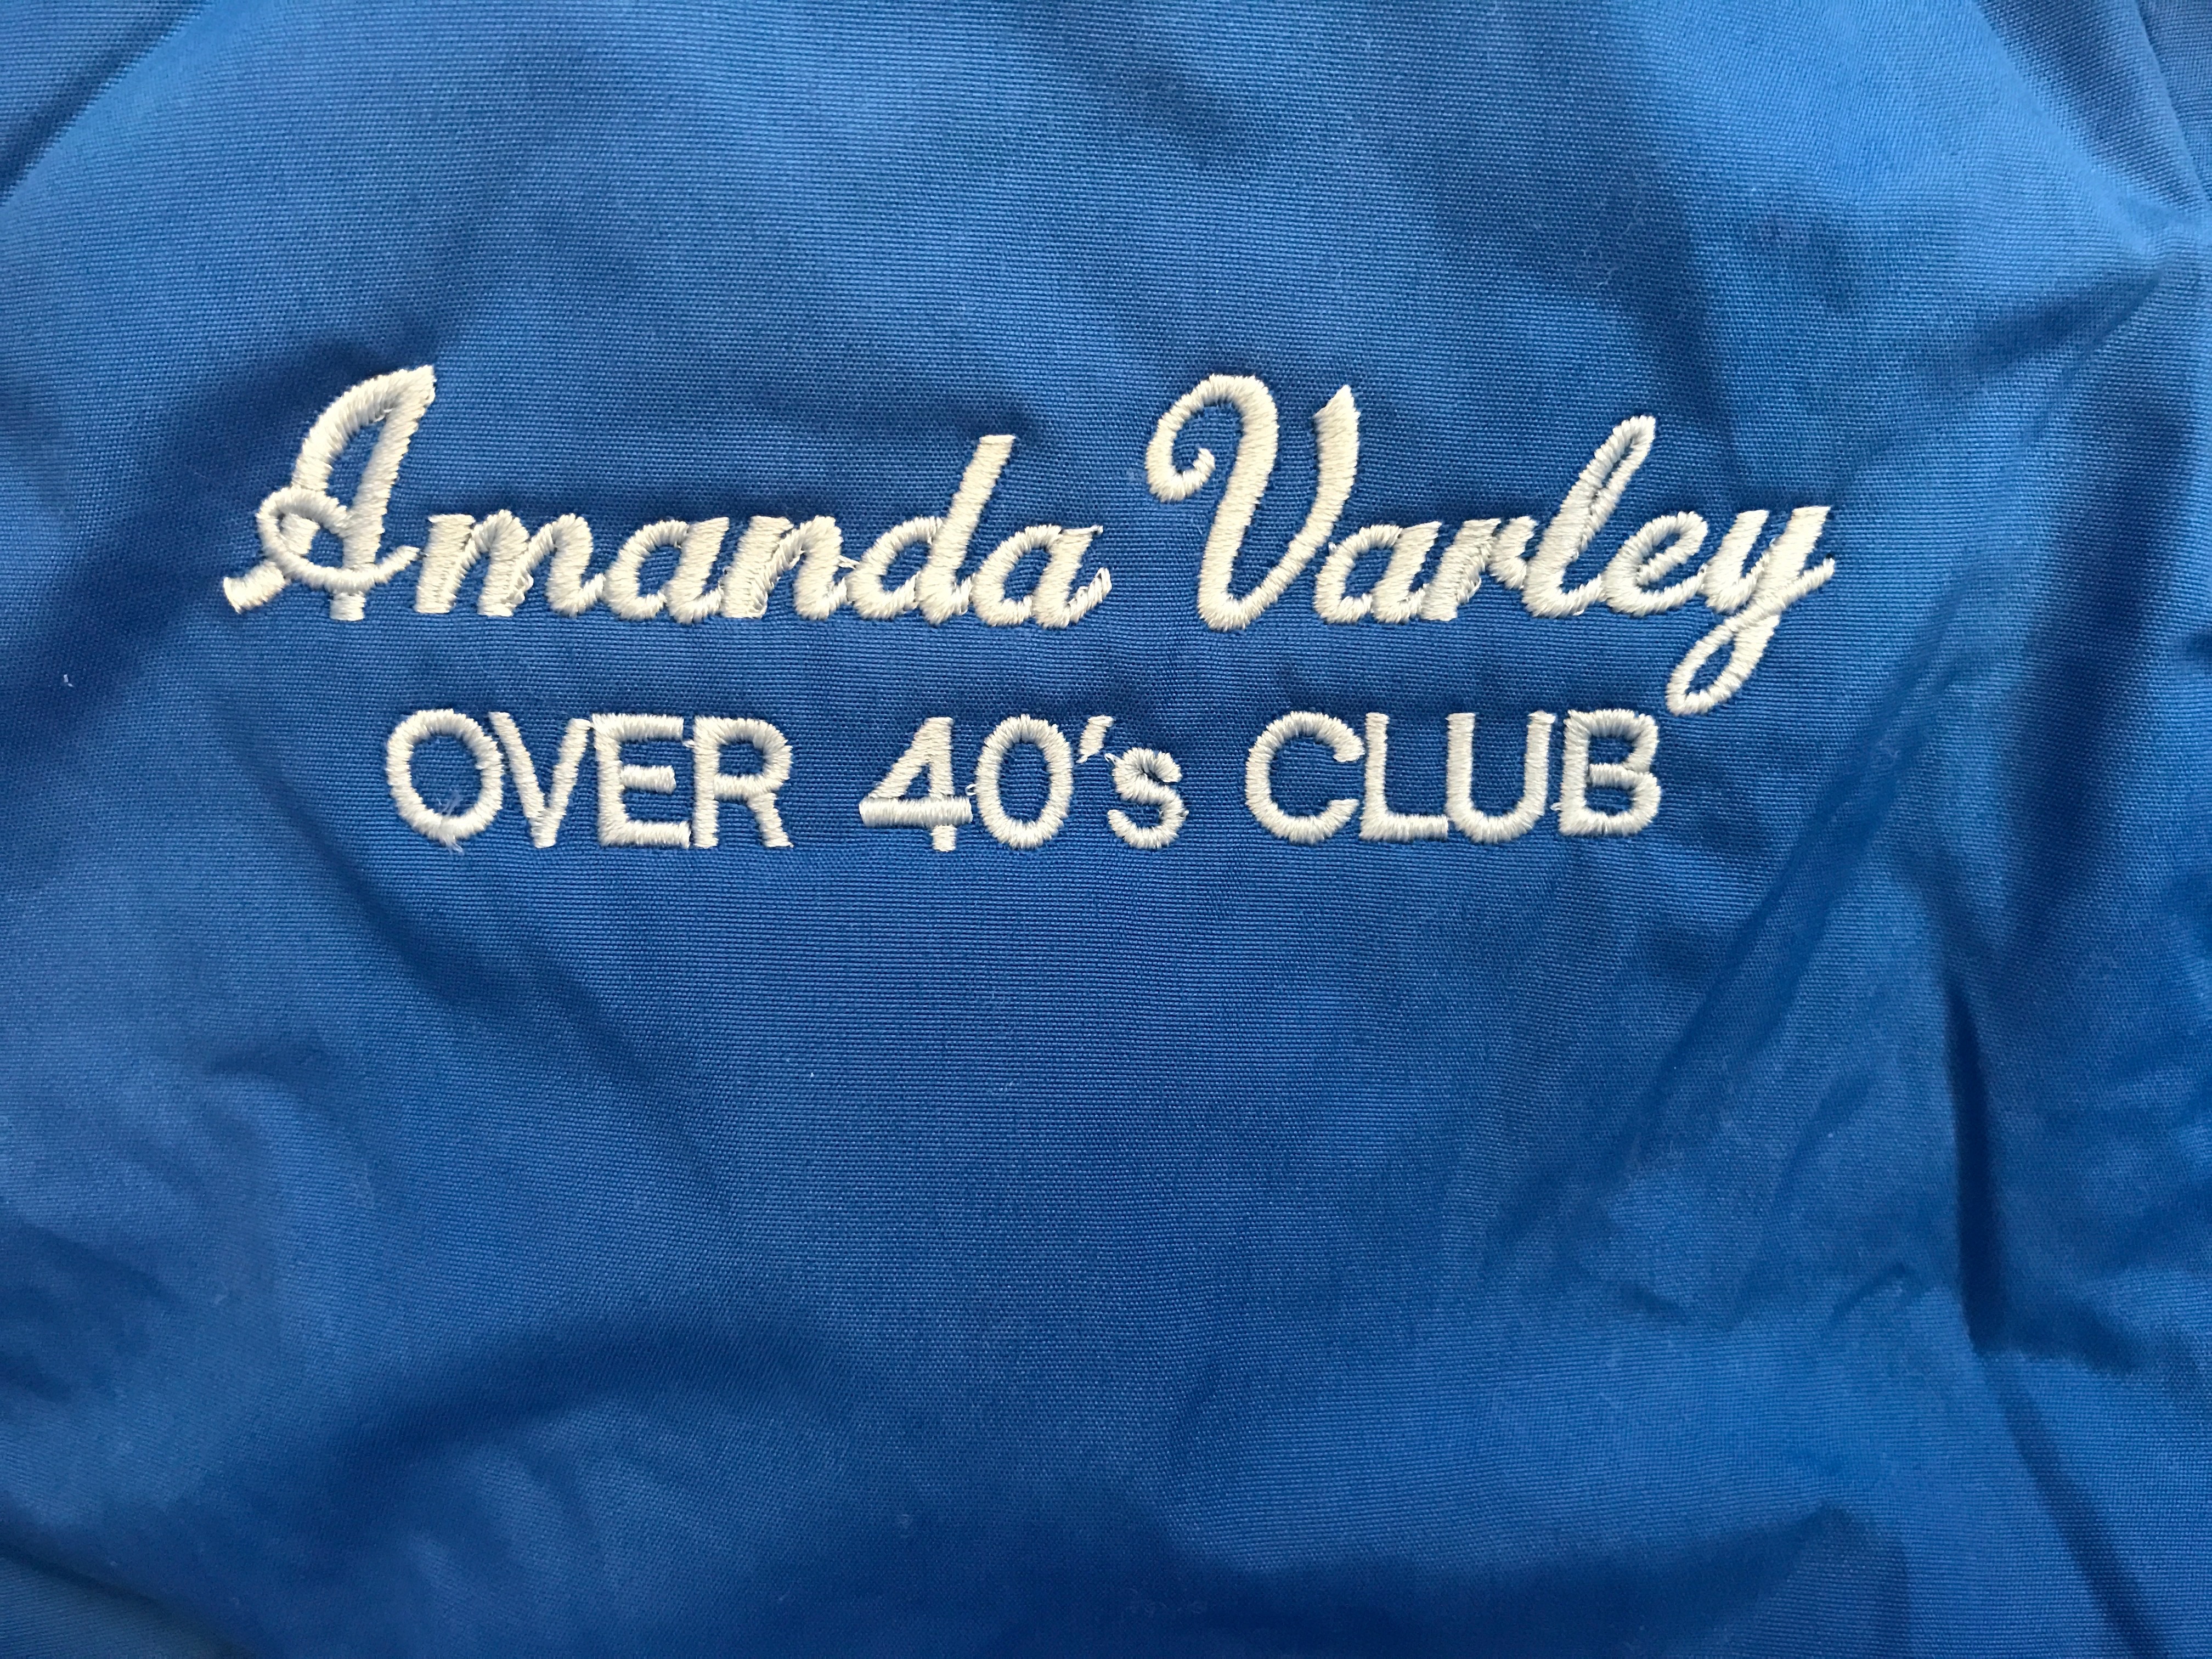 Amanda Varley joins the Club!